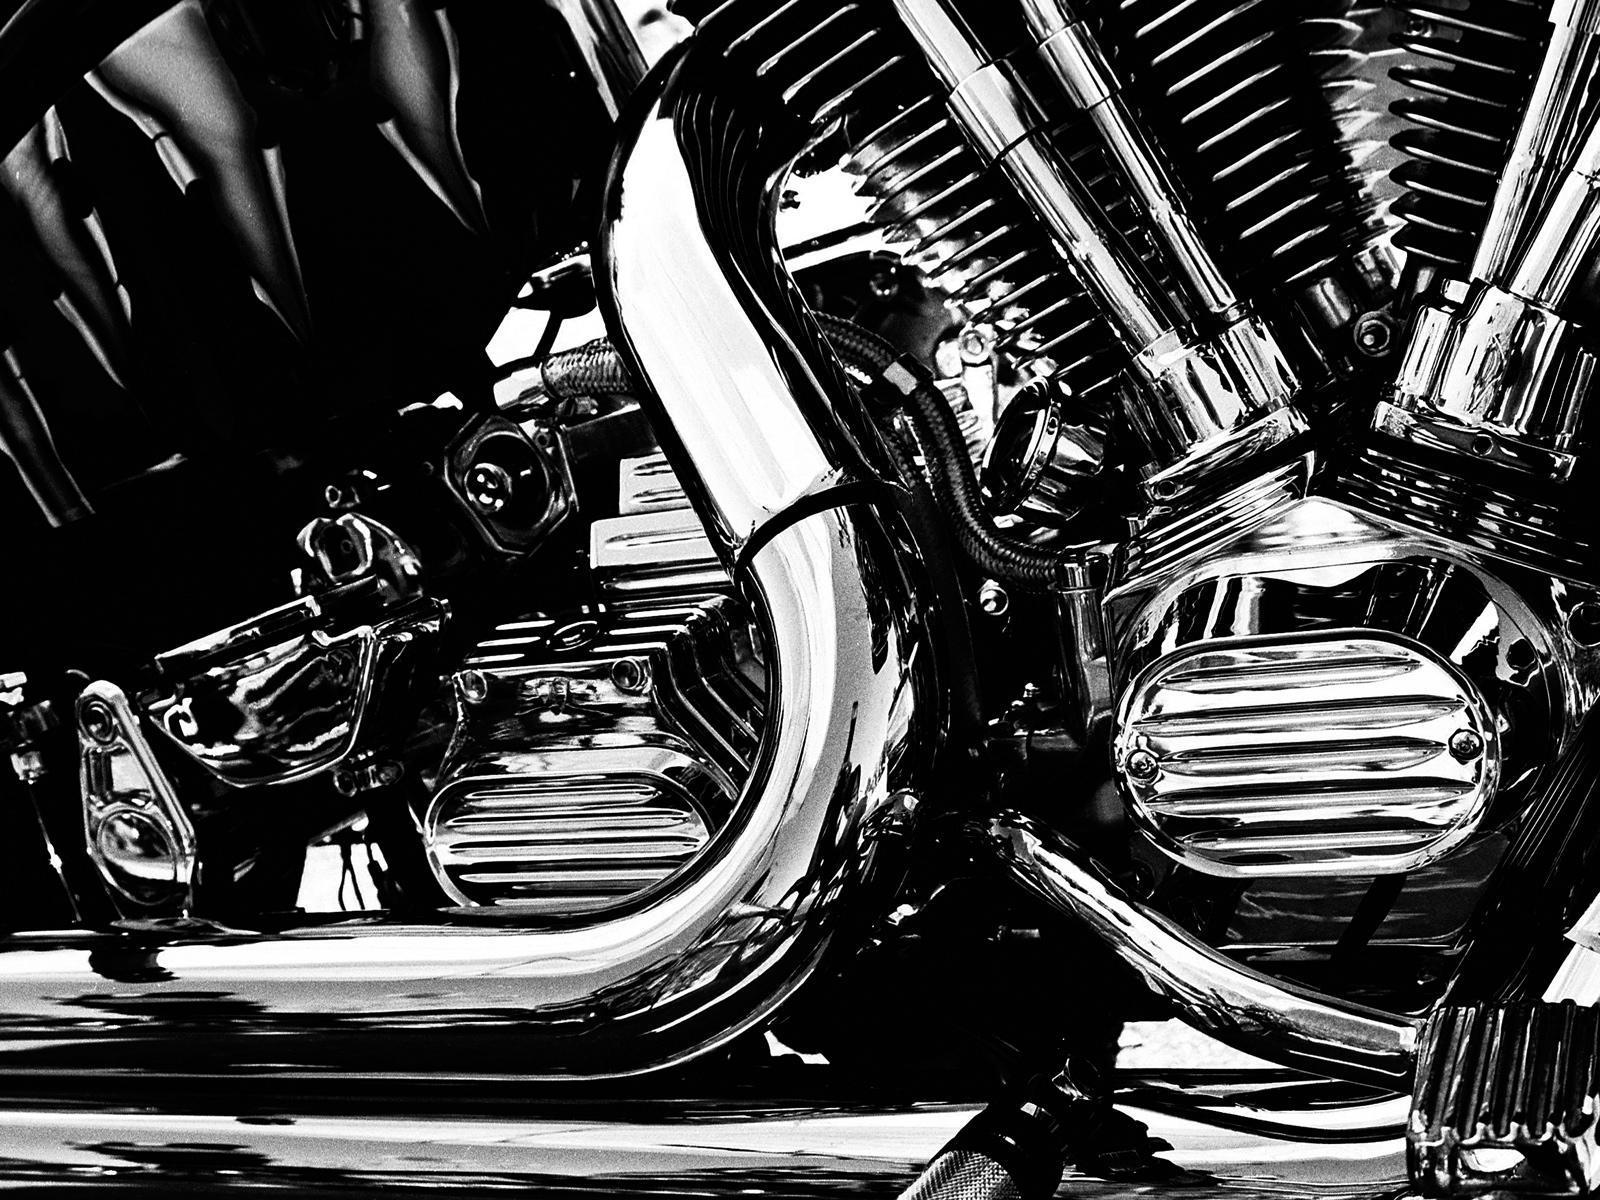 Chrome motorbike free desktop background wallpaper image